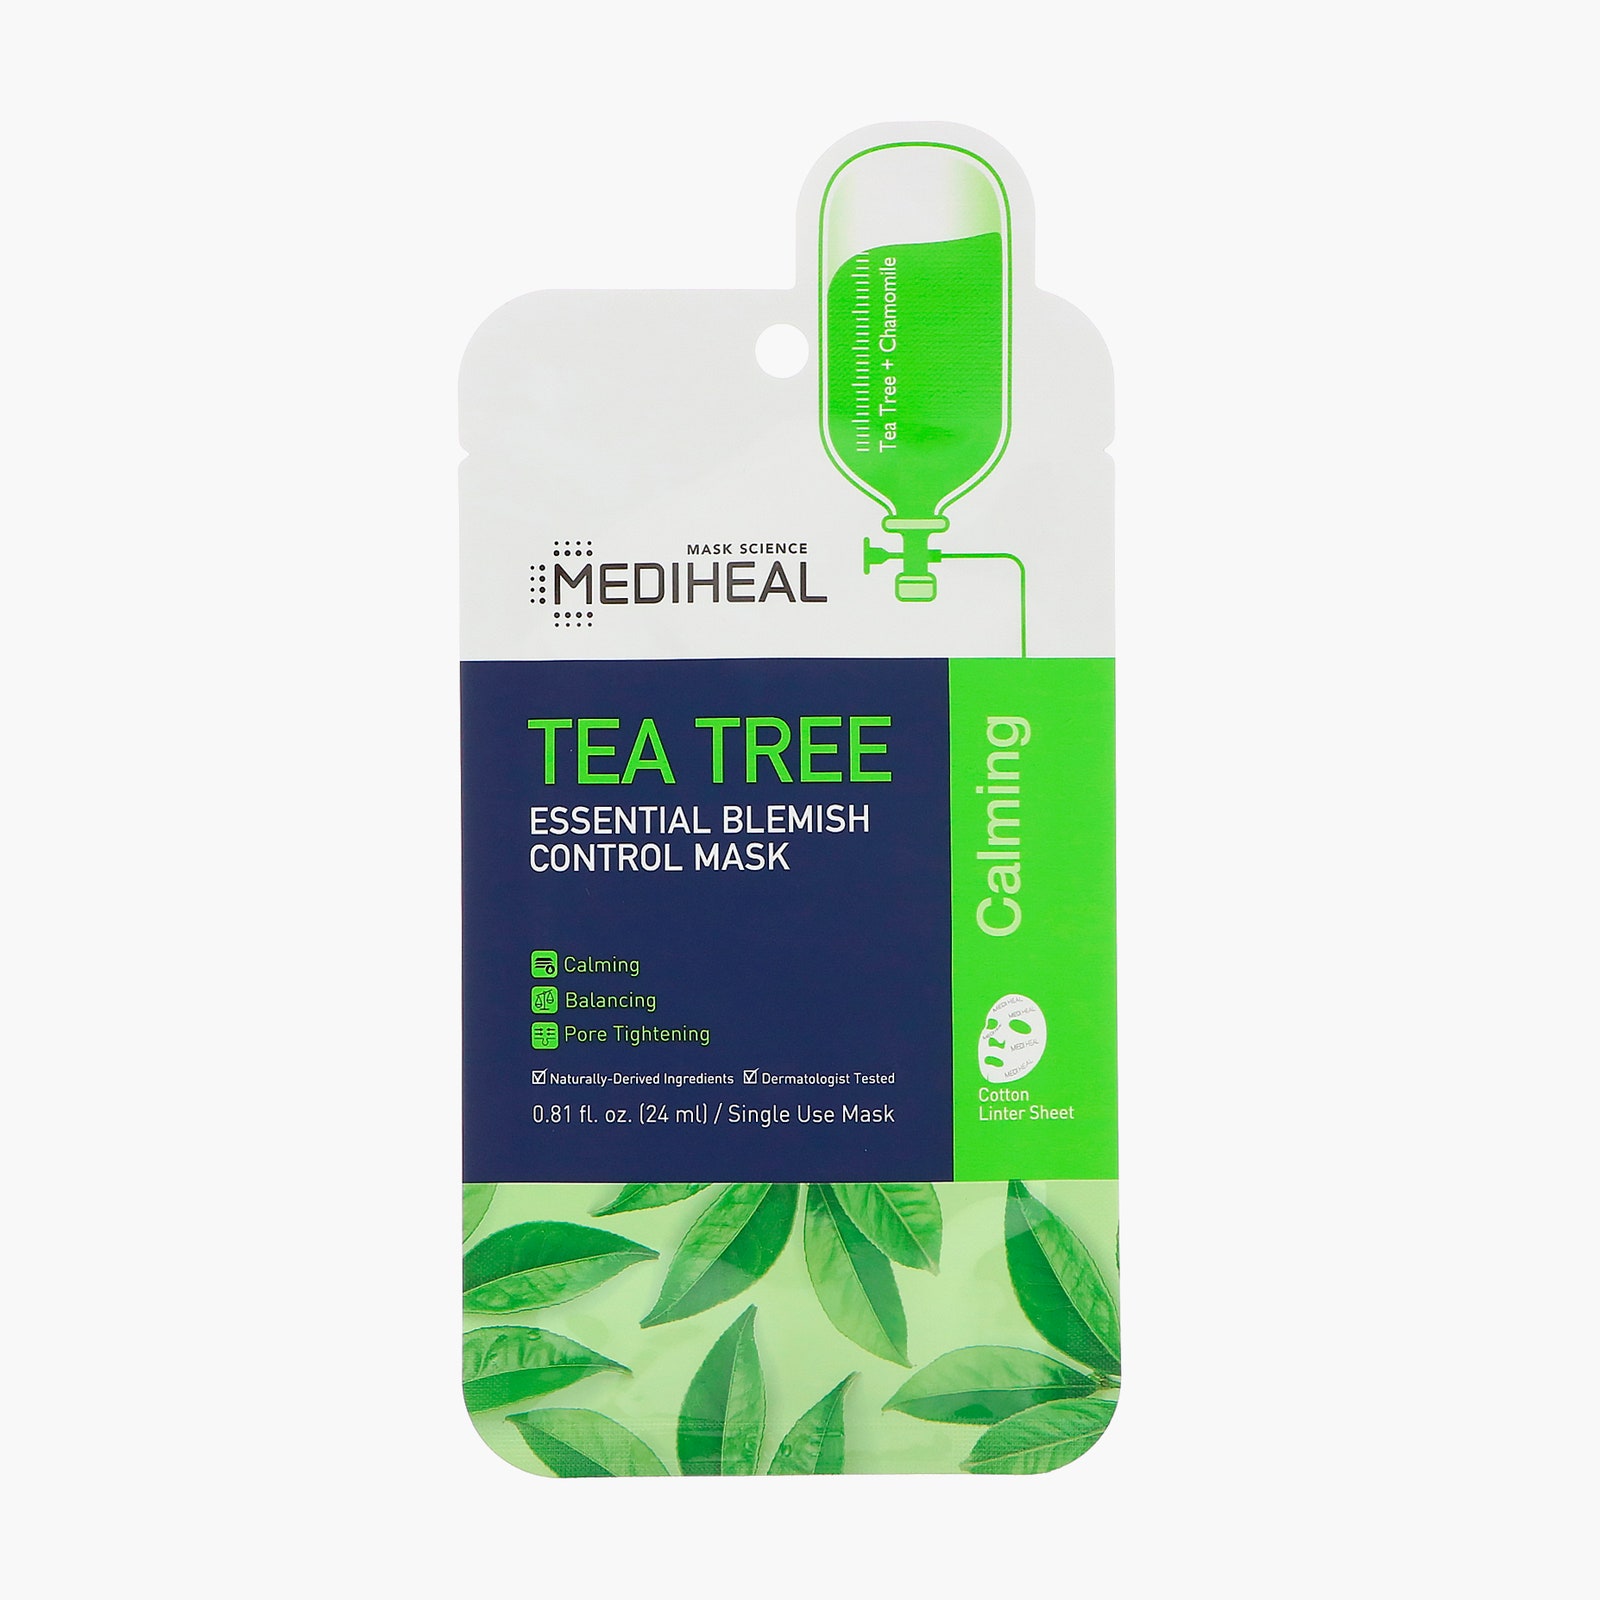 Маска против жирности Tea Tree Mediheal 701 рубль за 5 штук